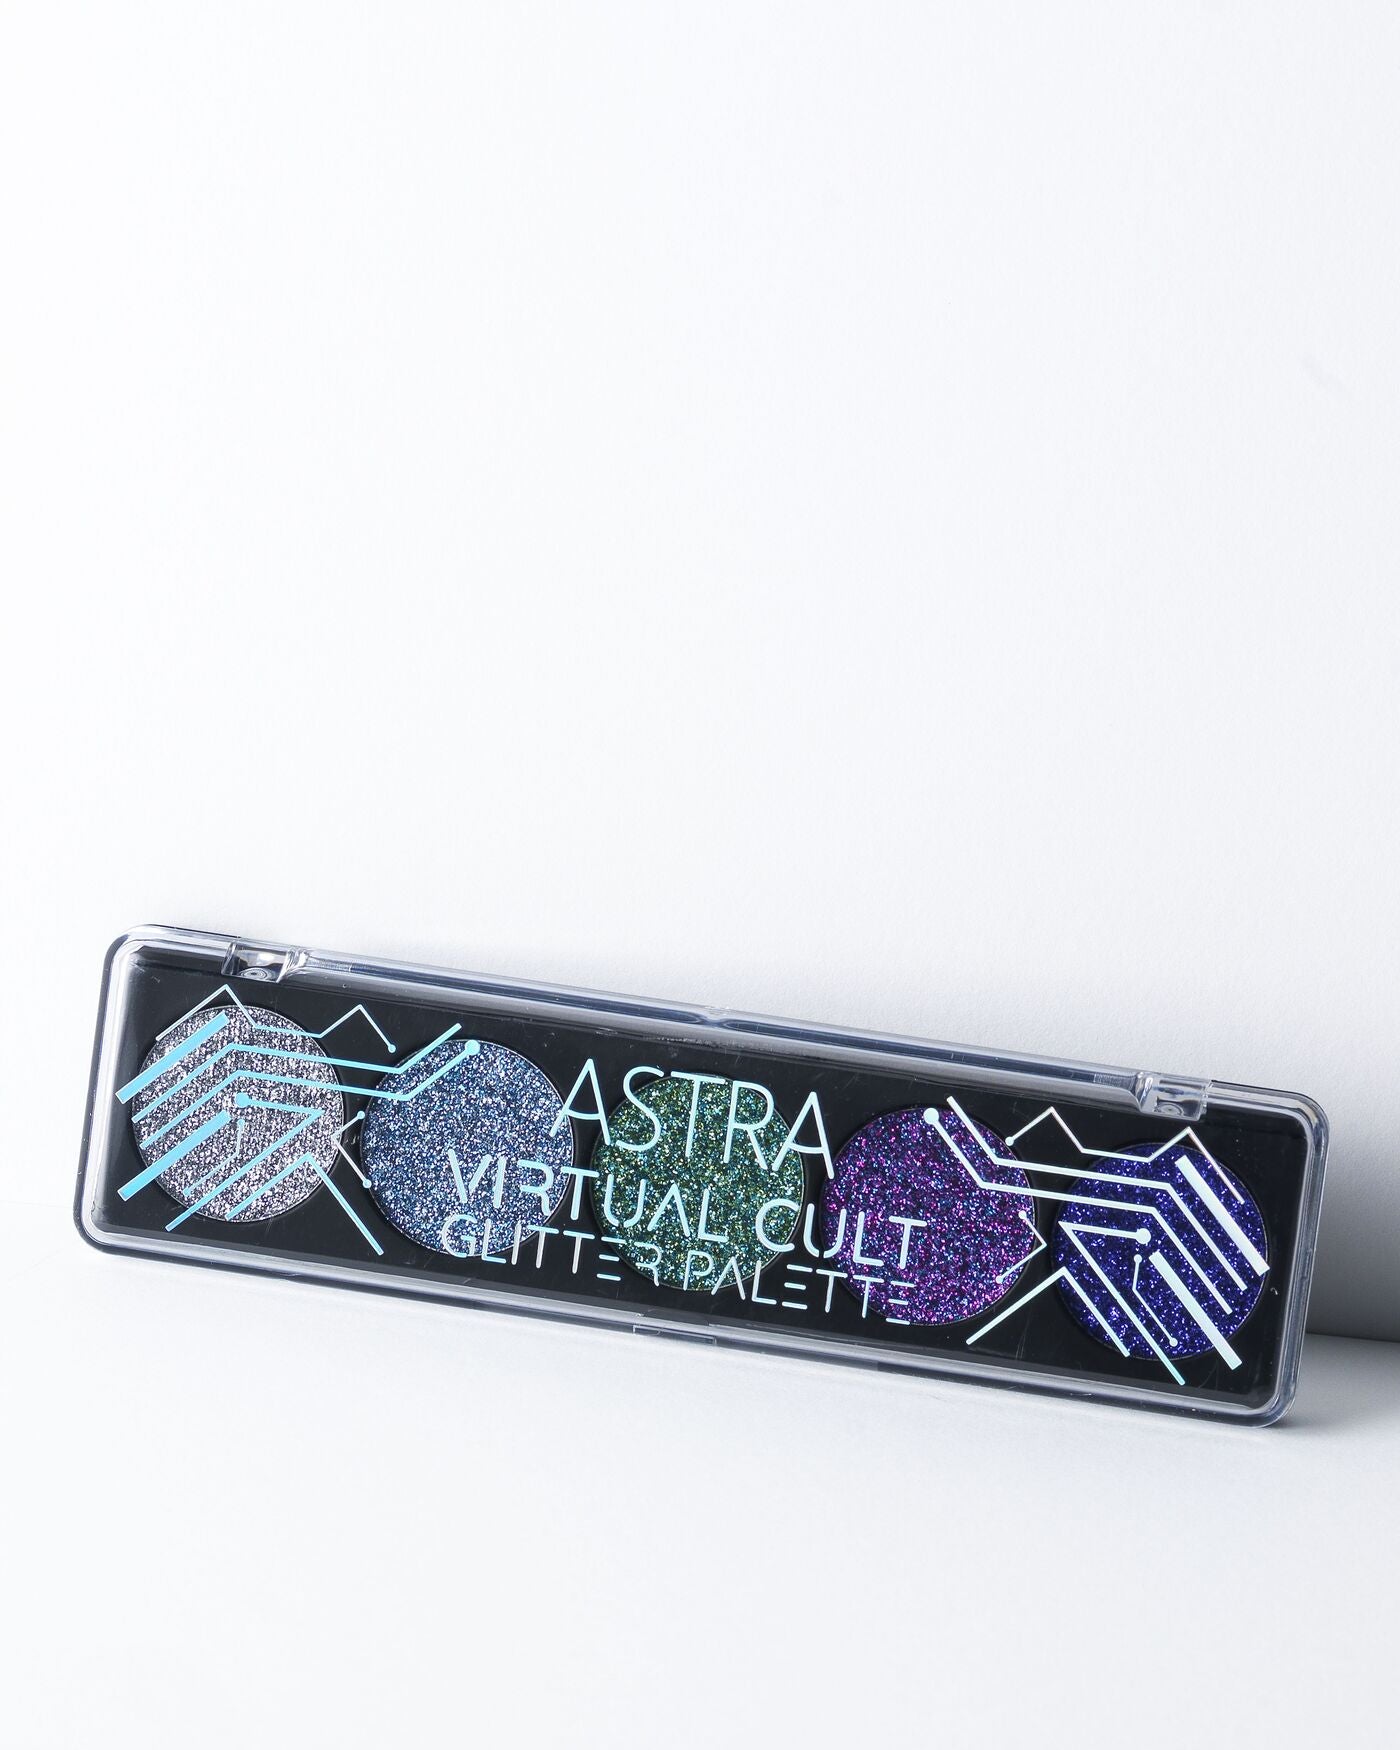 VIRTUAL CULT - Palette Occhi Glitter - 03 - Bionic Mermaid - Astra Make-Up